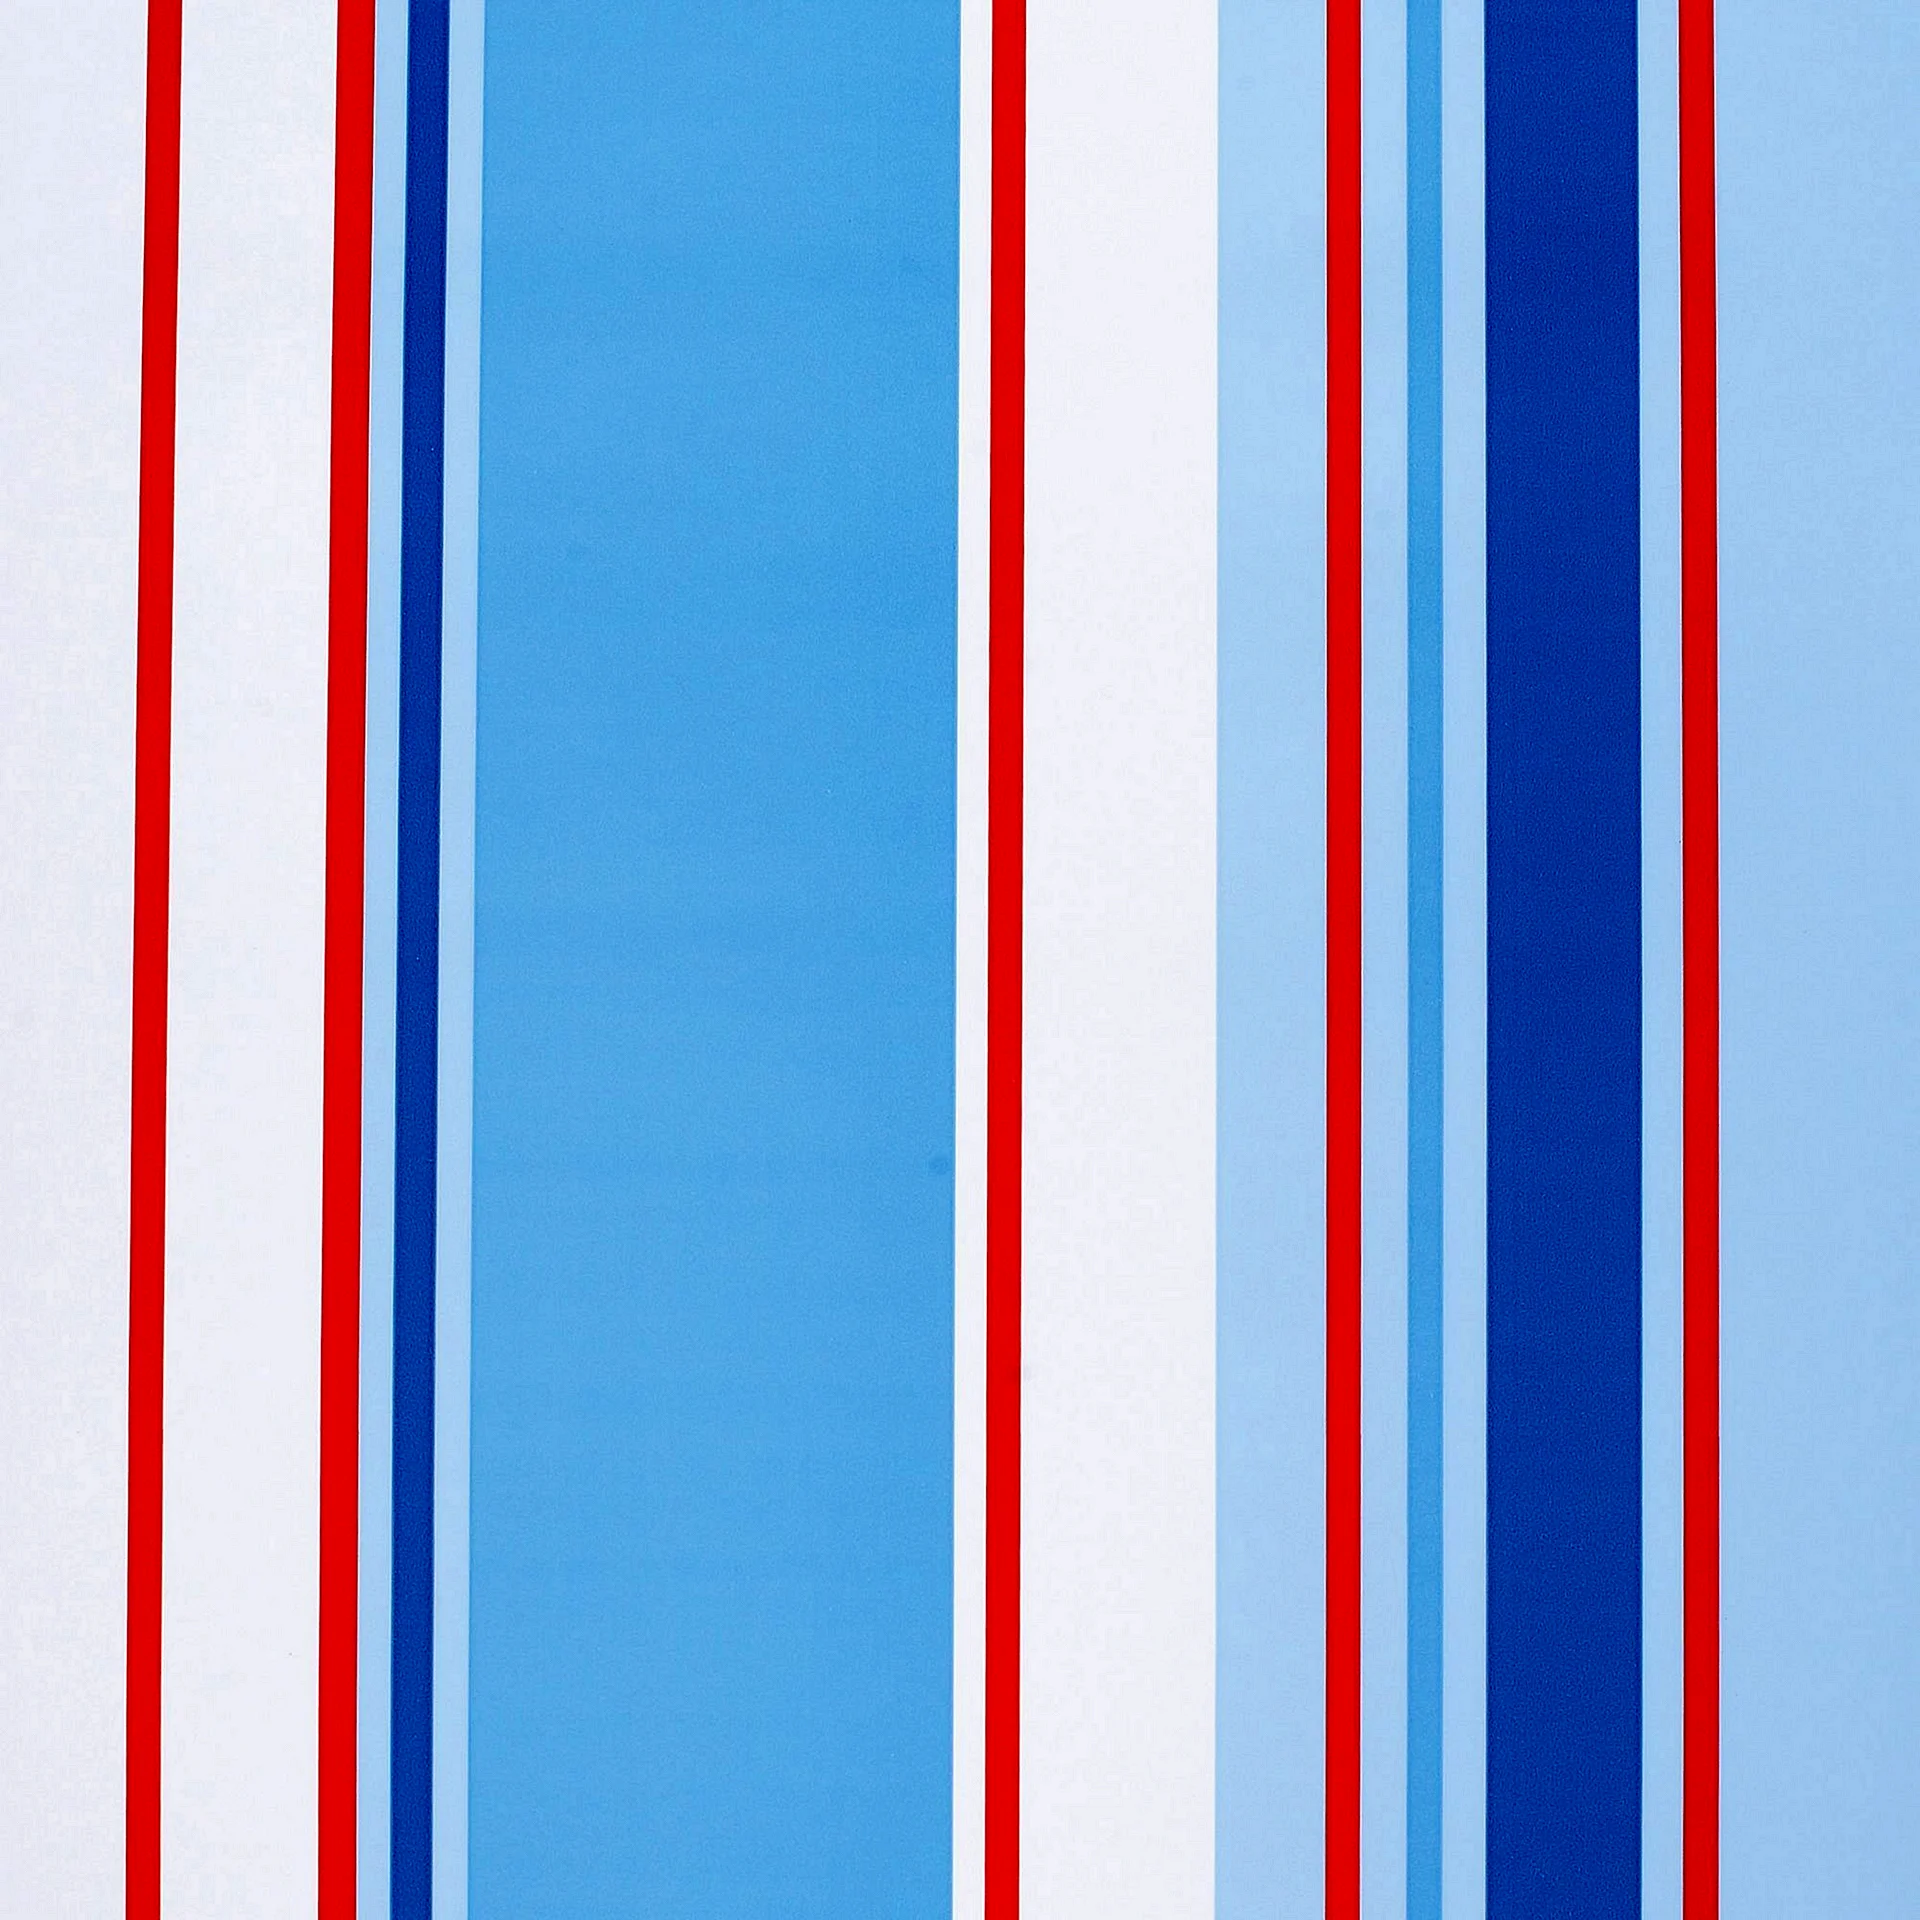 Blue And White Stripes Wallpaper